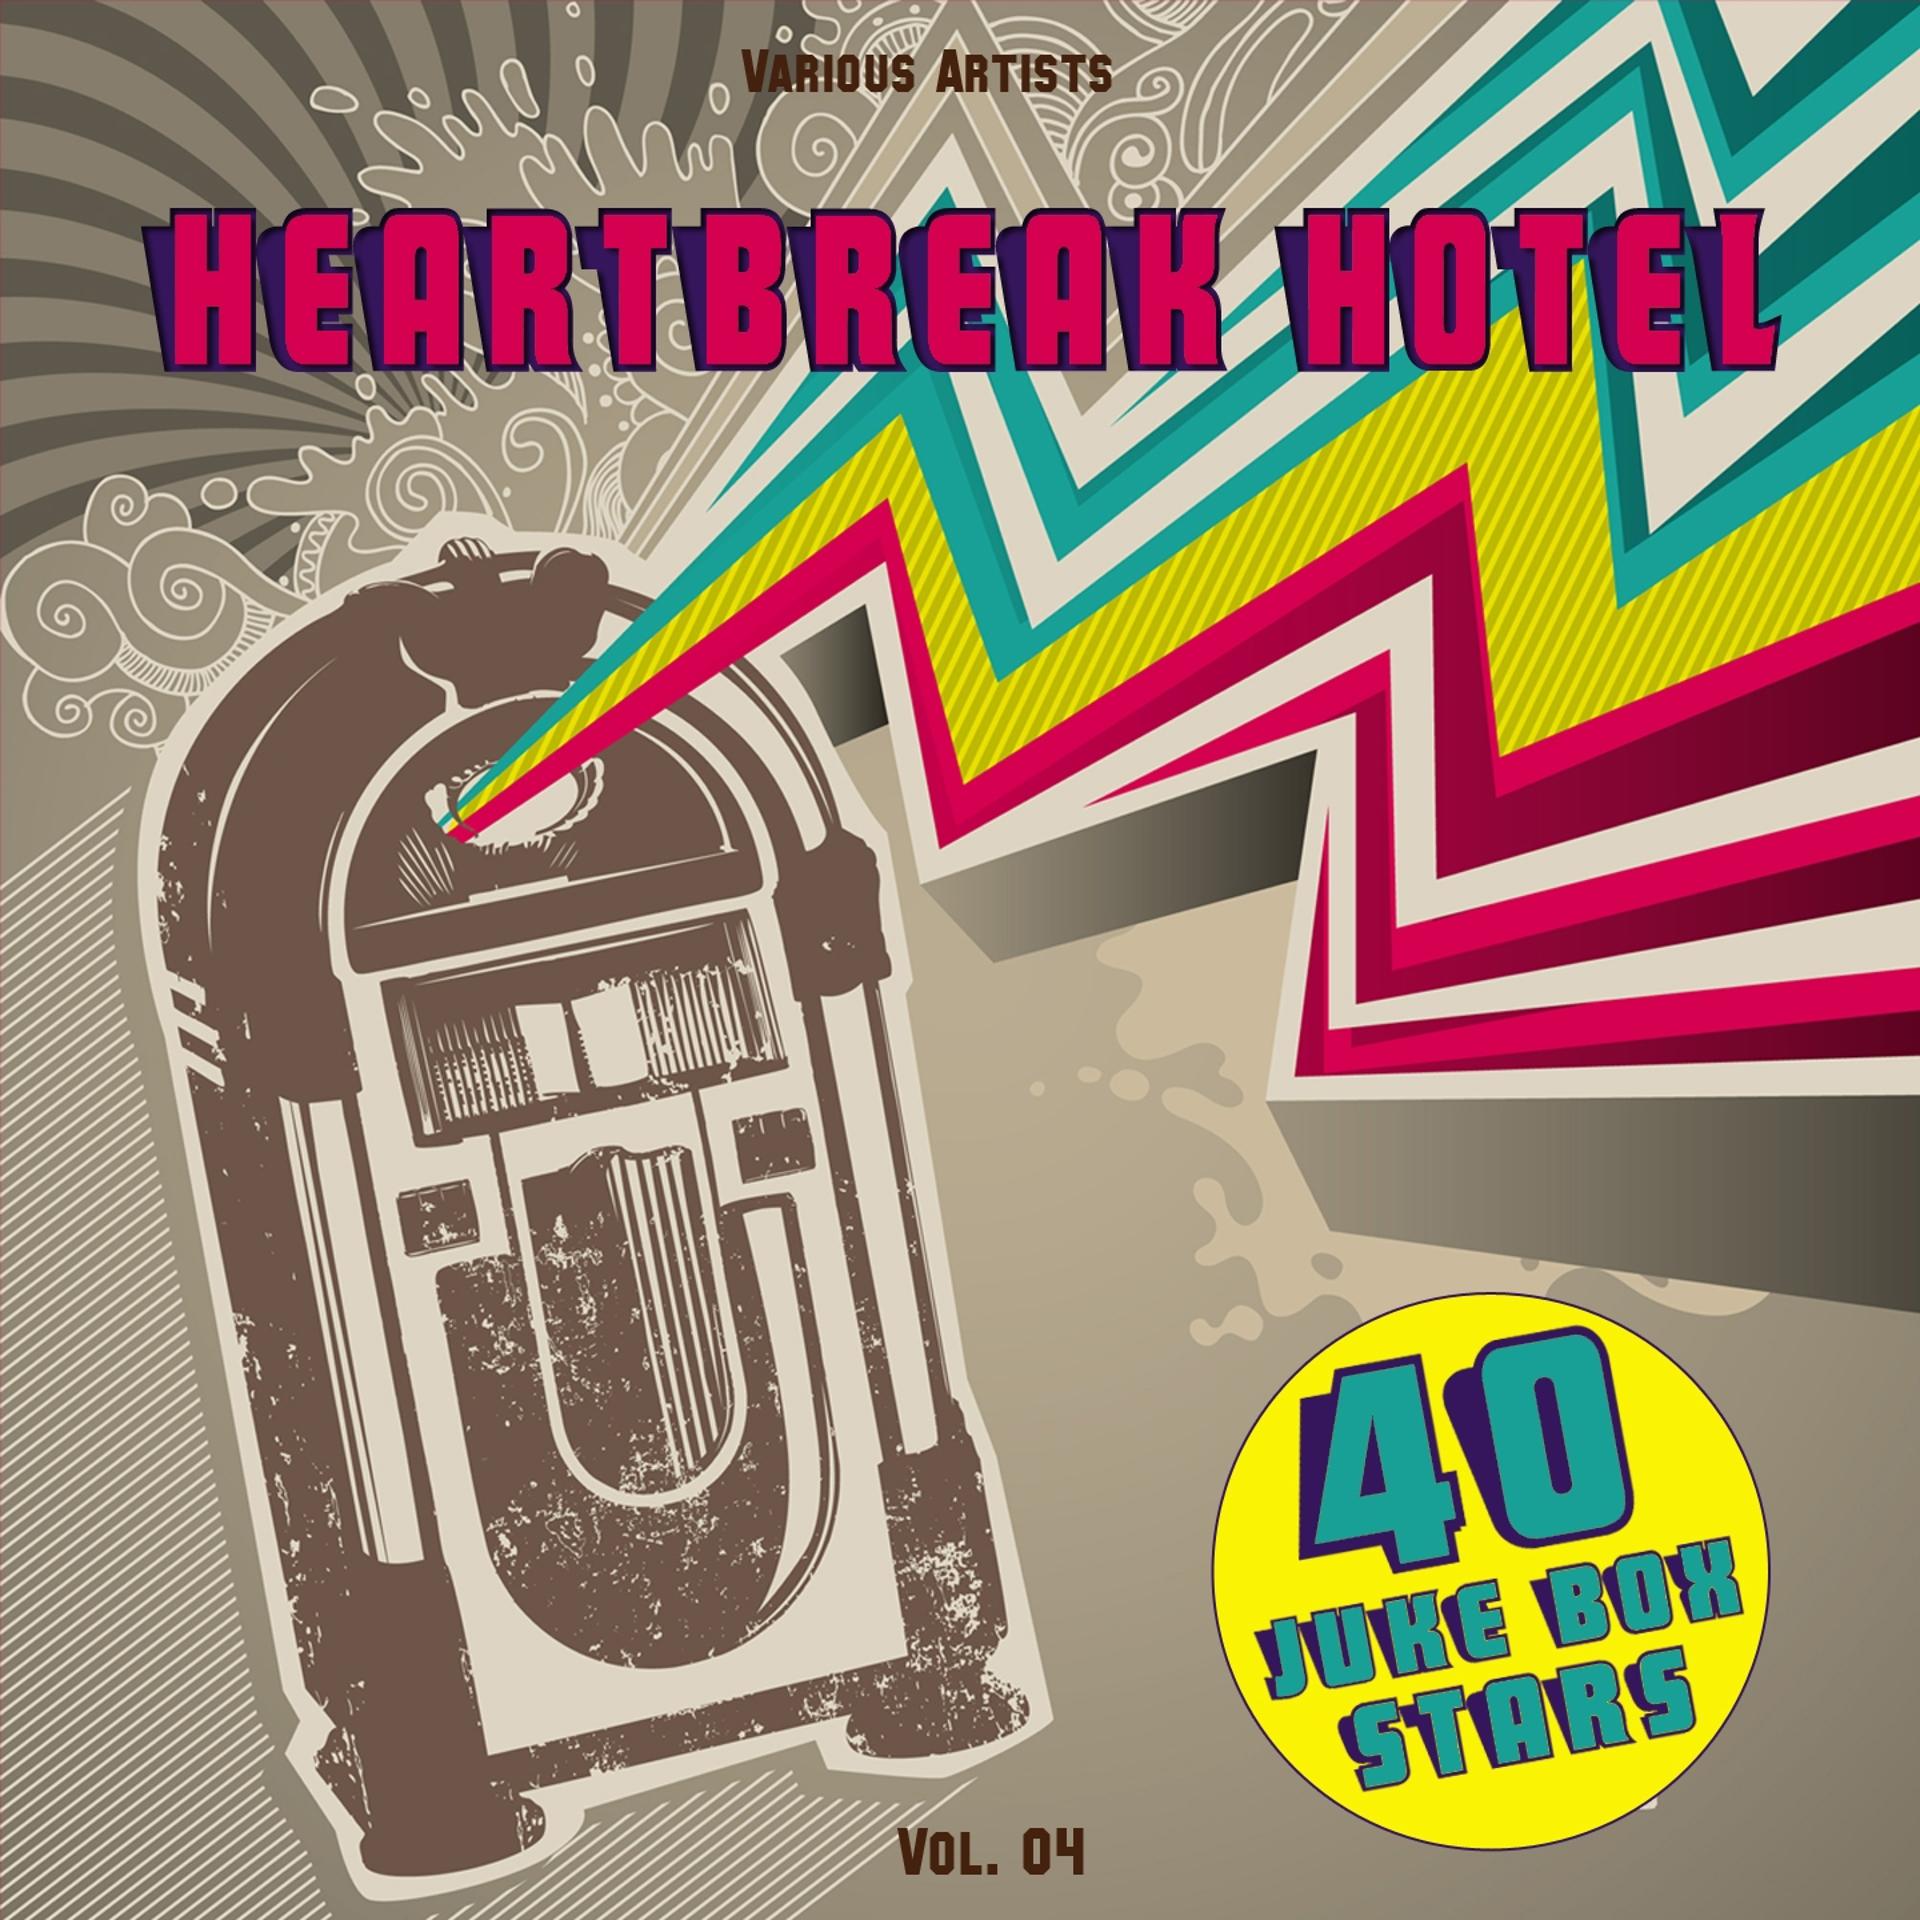 Постер альбома Heartbreak Hotel, Vol. 04 (40 Juke Box Stars)